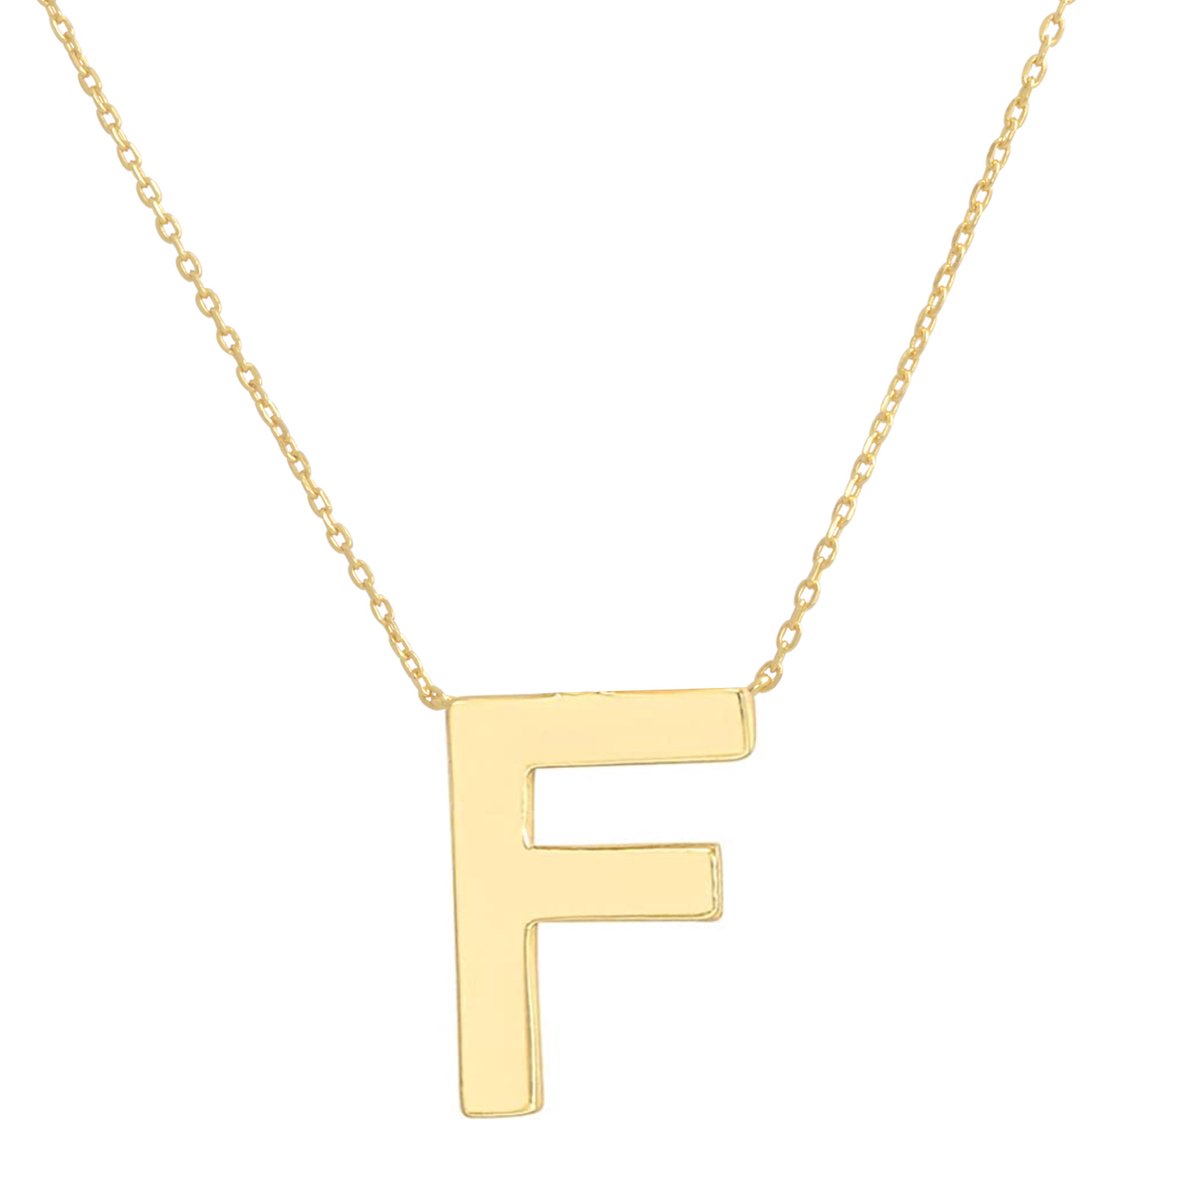 Fate Jewellery FJ4105 - Letter F - 925 zilver - goud verguld - 45cm +5cm